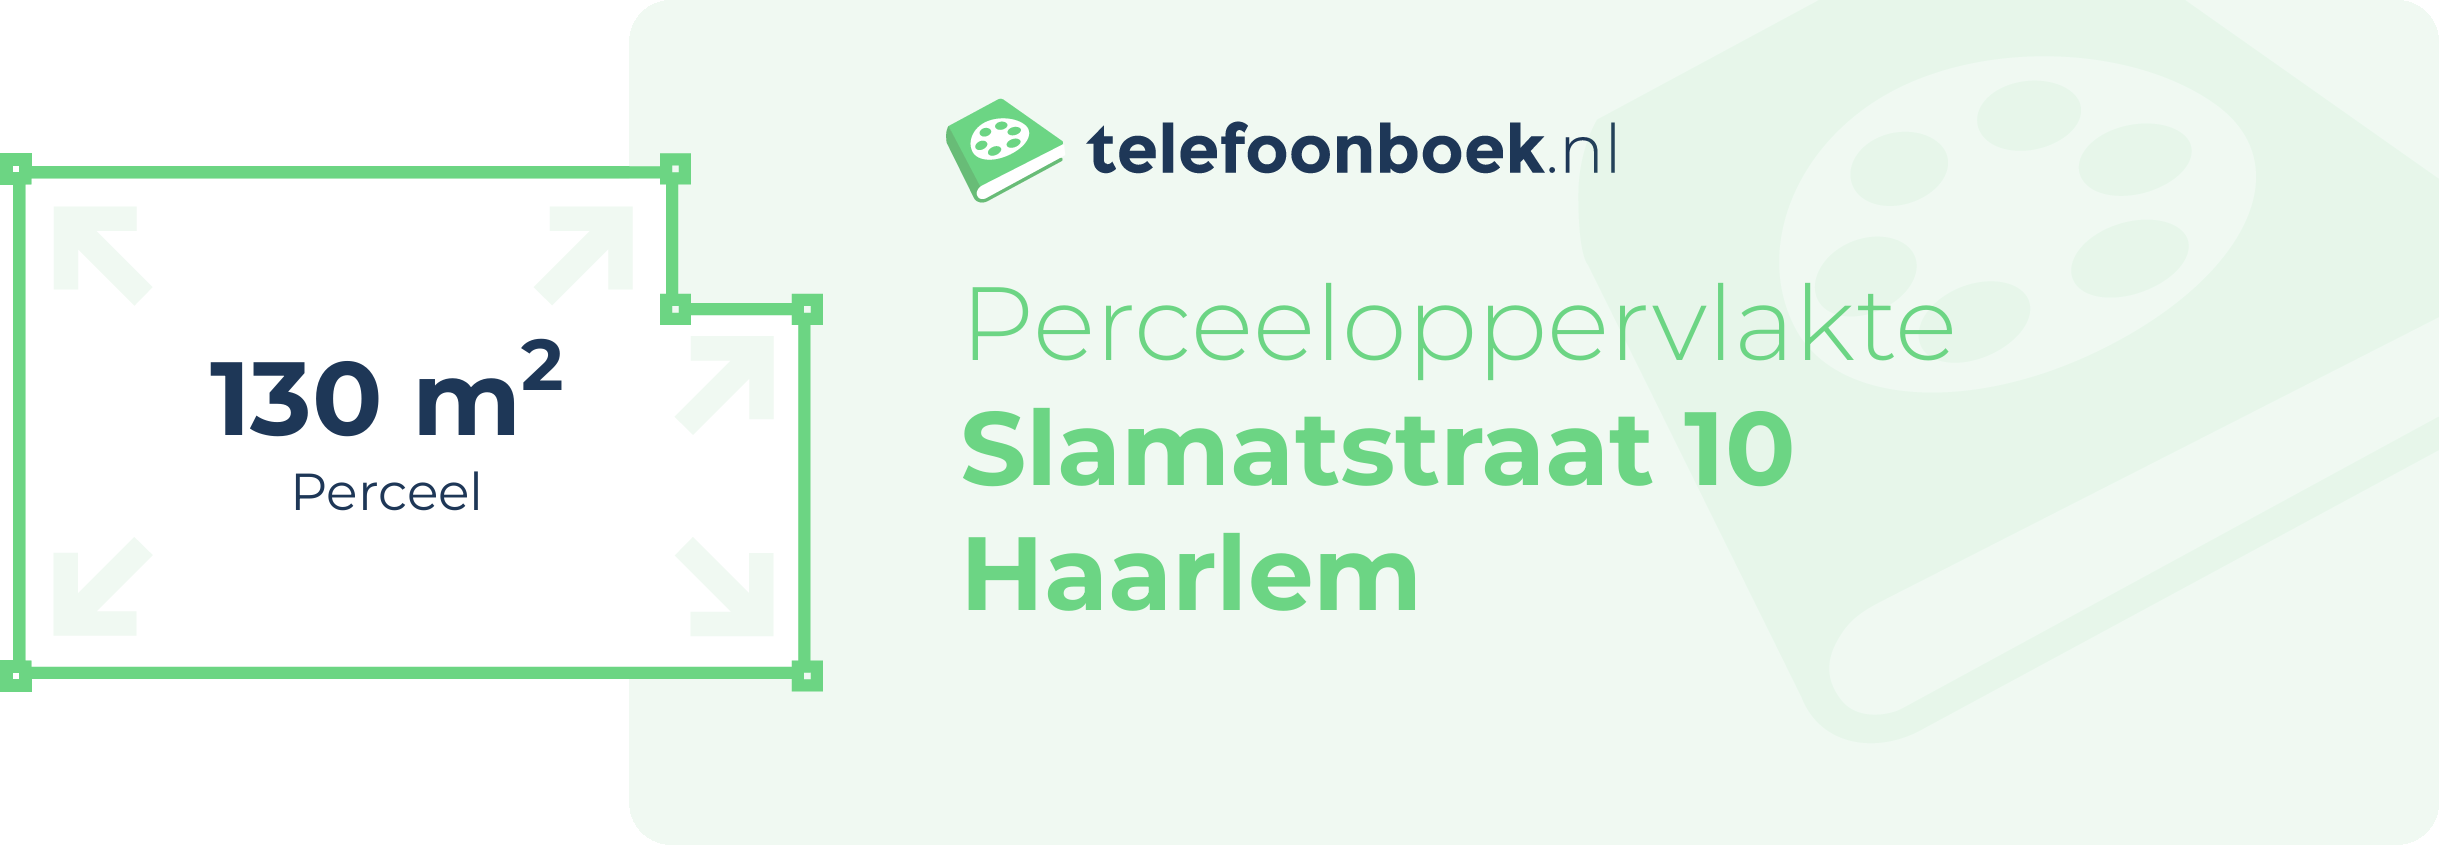 Perceeloppervlakte Slamatstraat 10 Haarlem